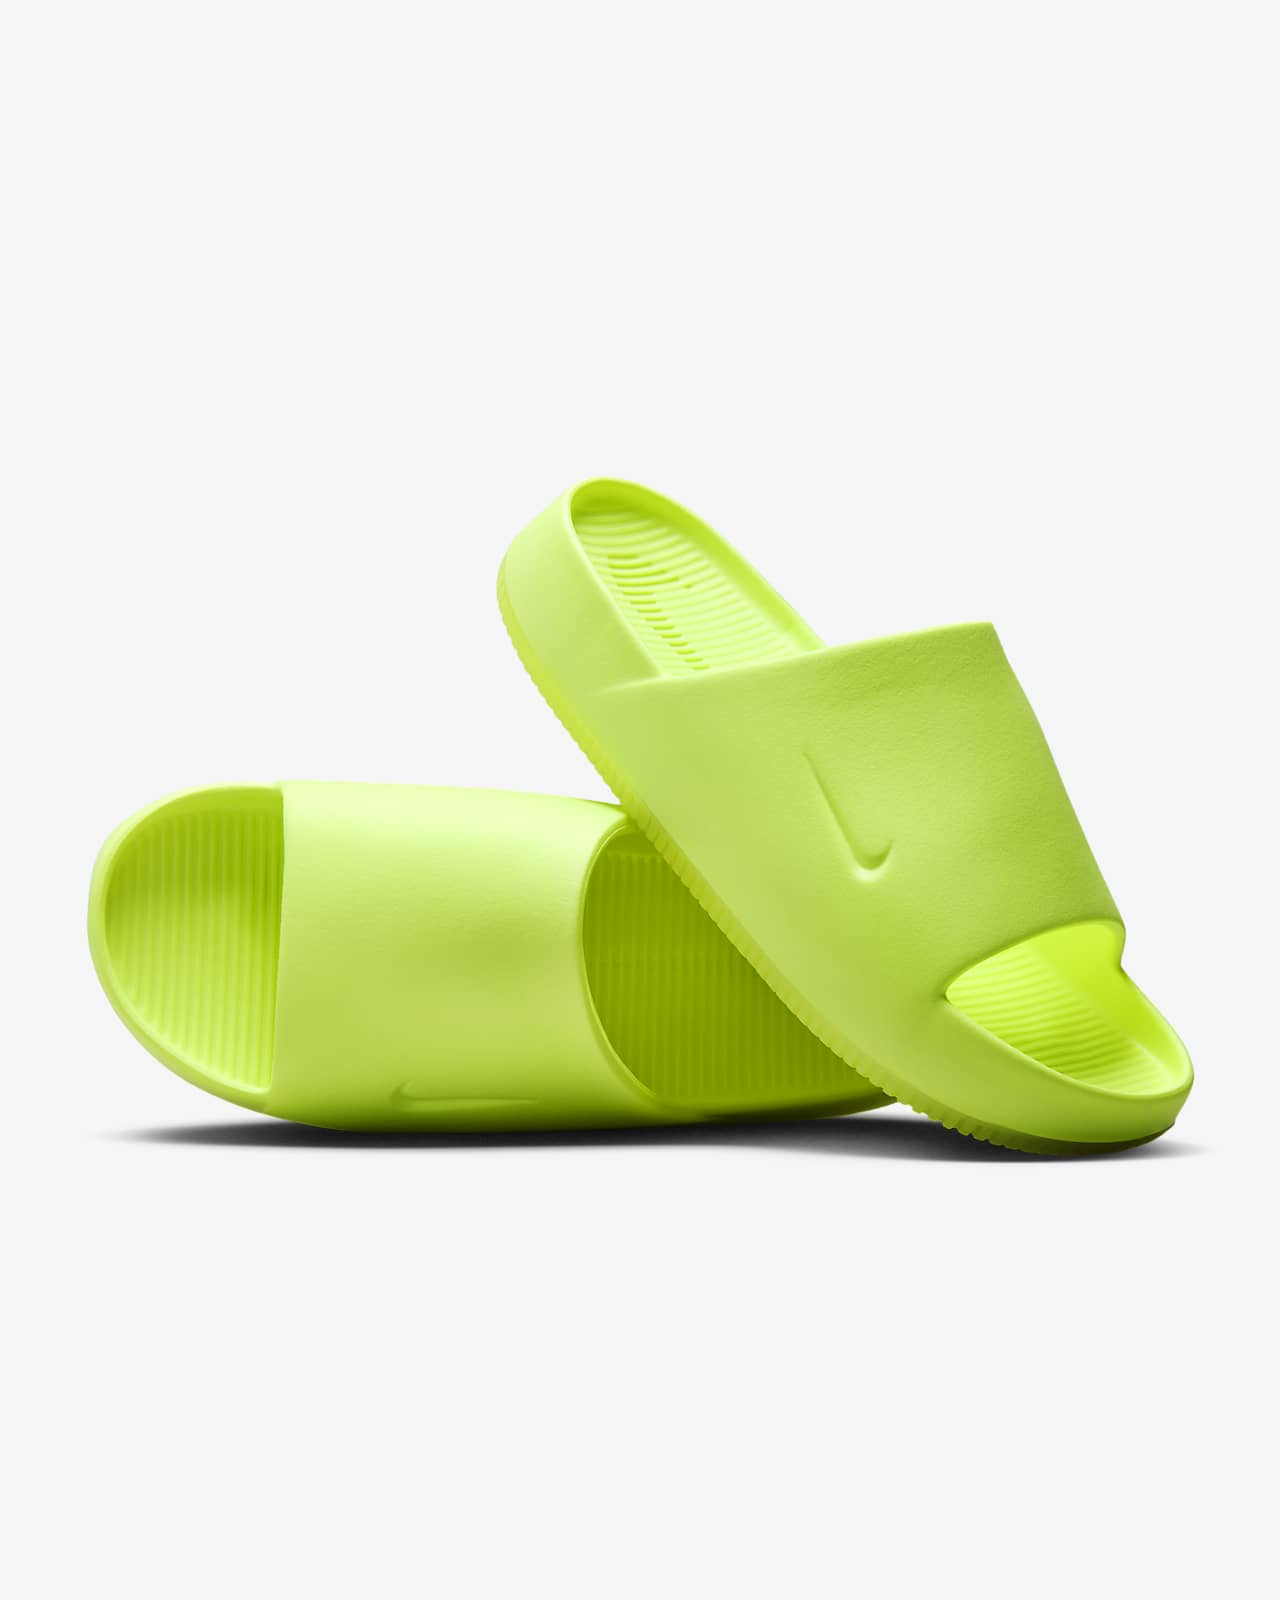 Nike Calm Flip Flop Sandal Release Date